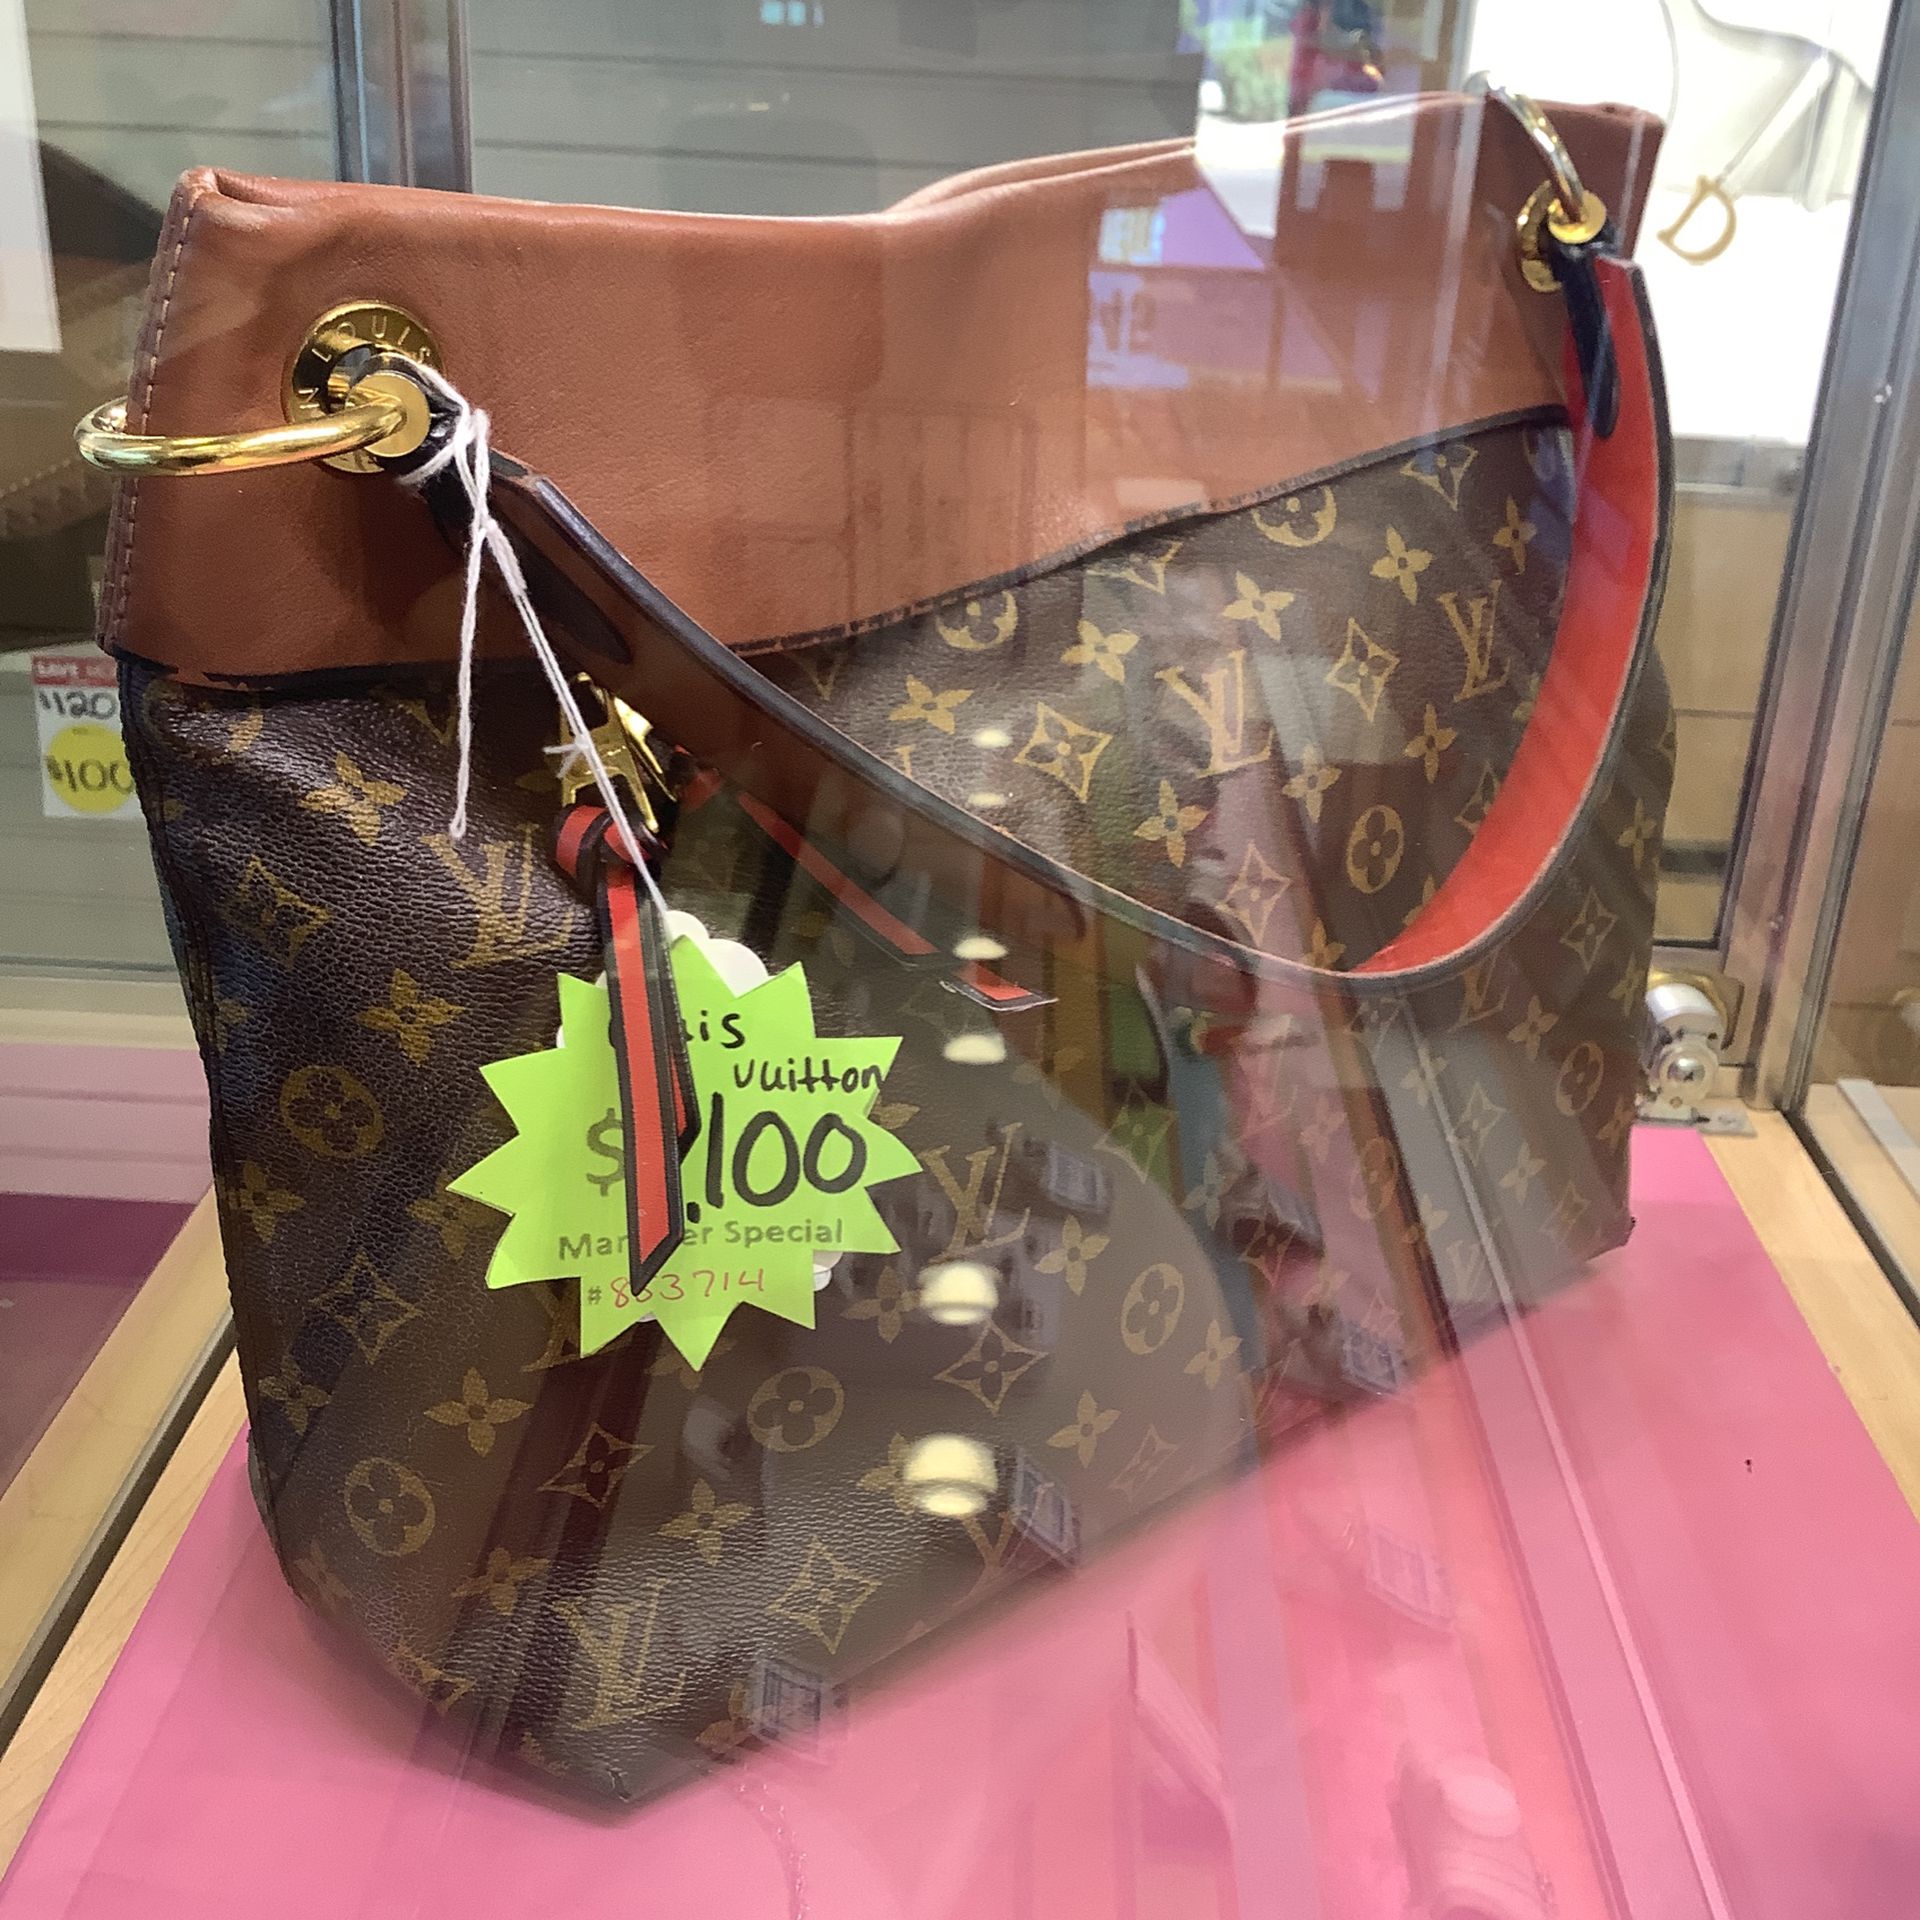 lv handbags for women clearance sale